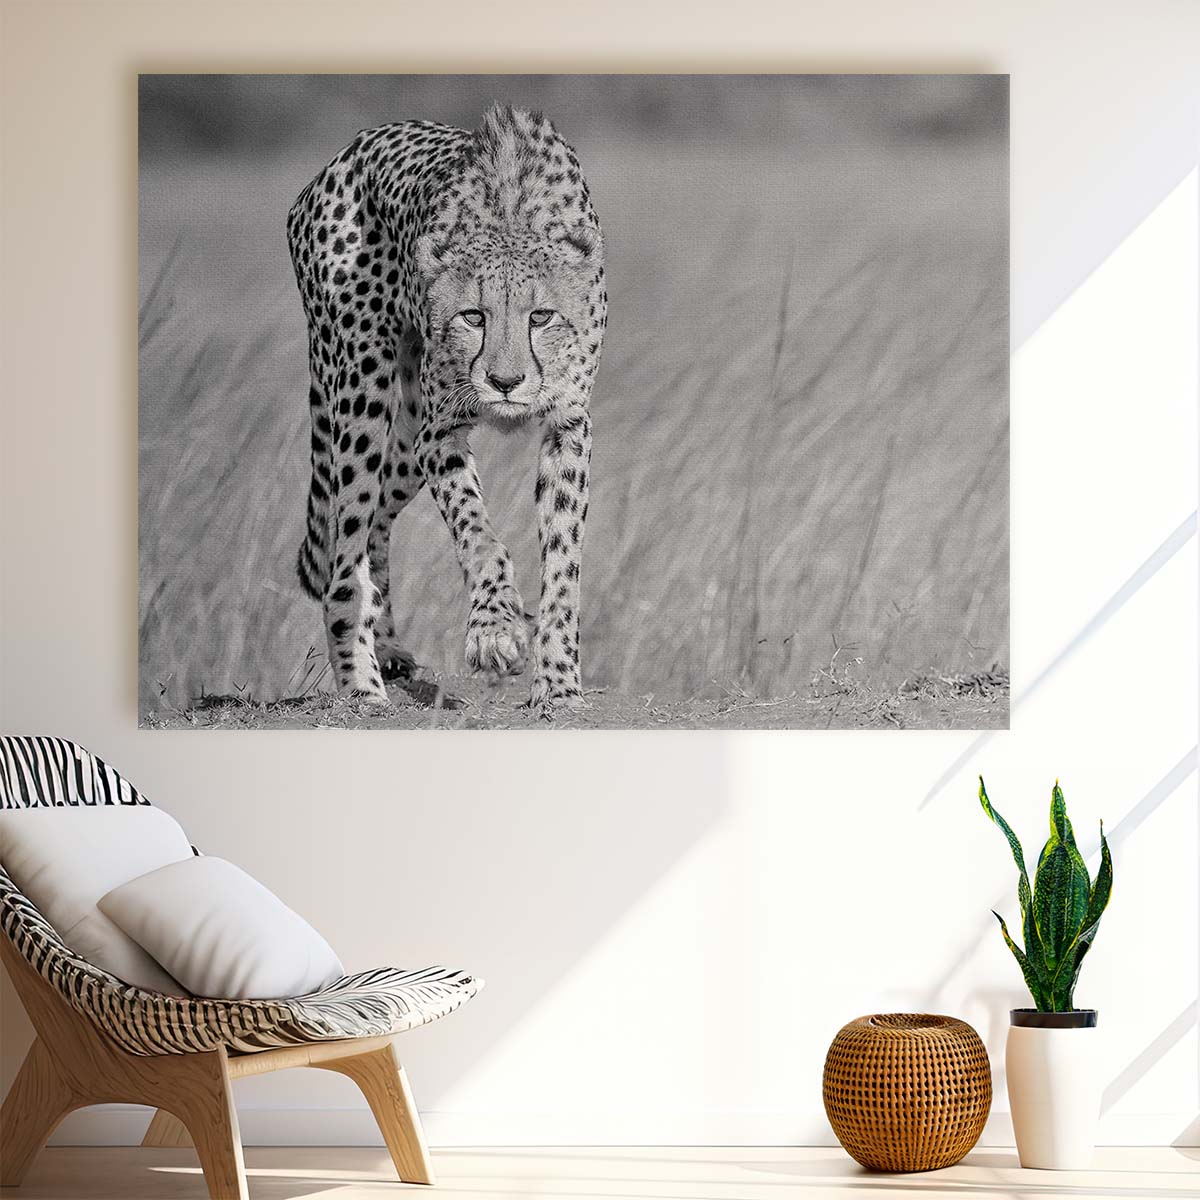 Intense Gaze Stalking Cheetah Monochrome Wall Art by Luxuriance Designs. Made in USA.